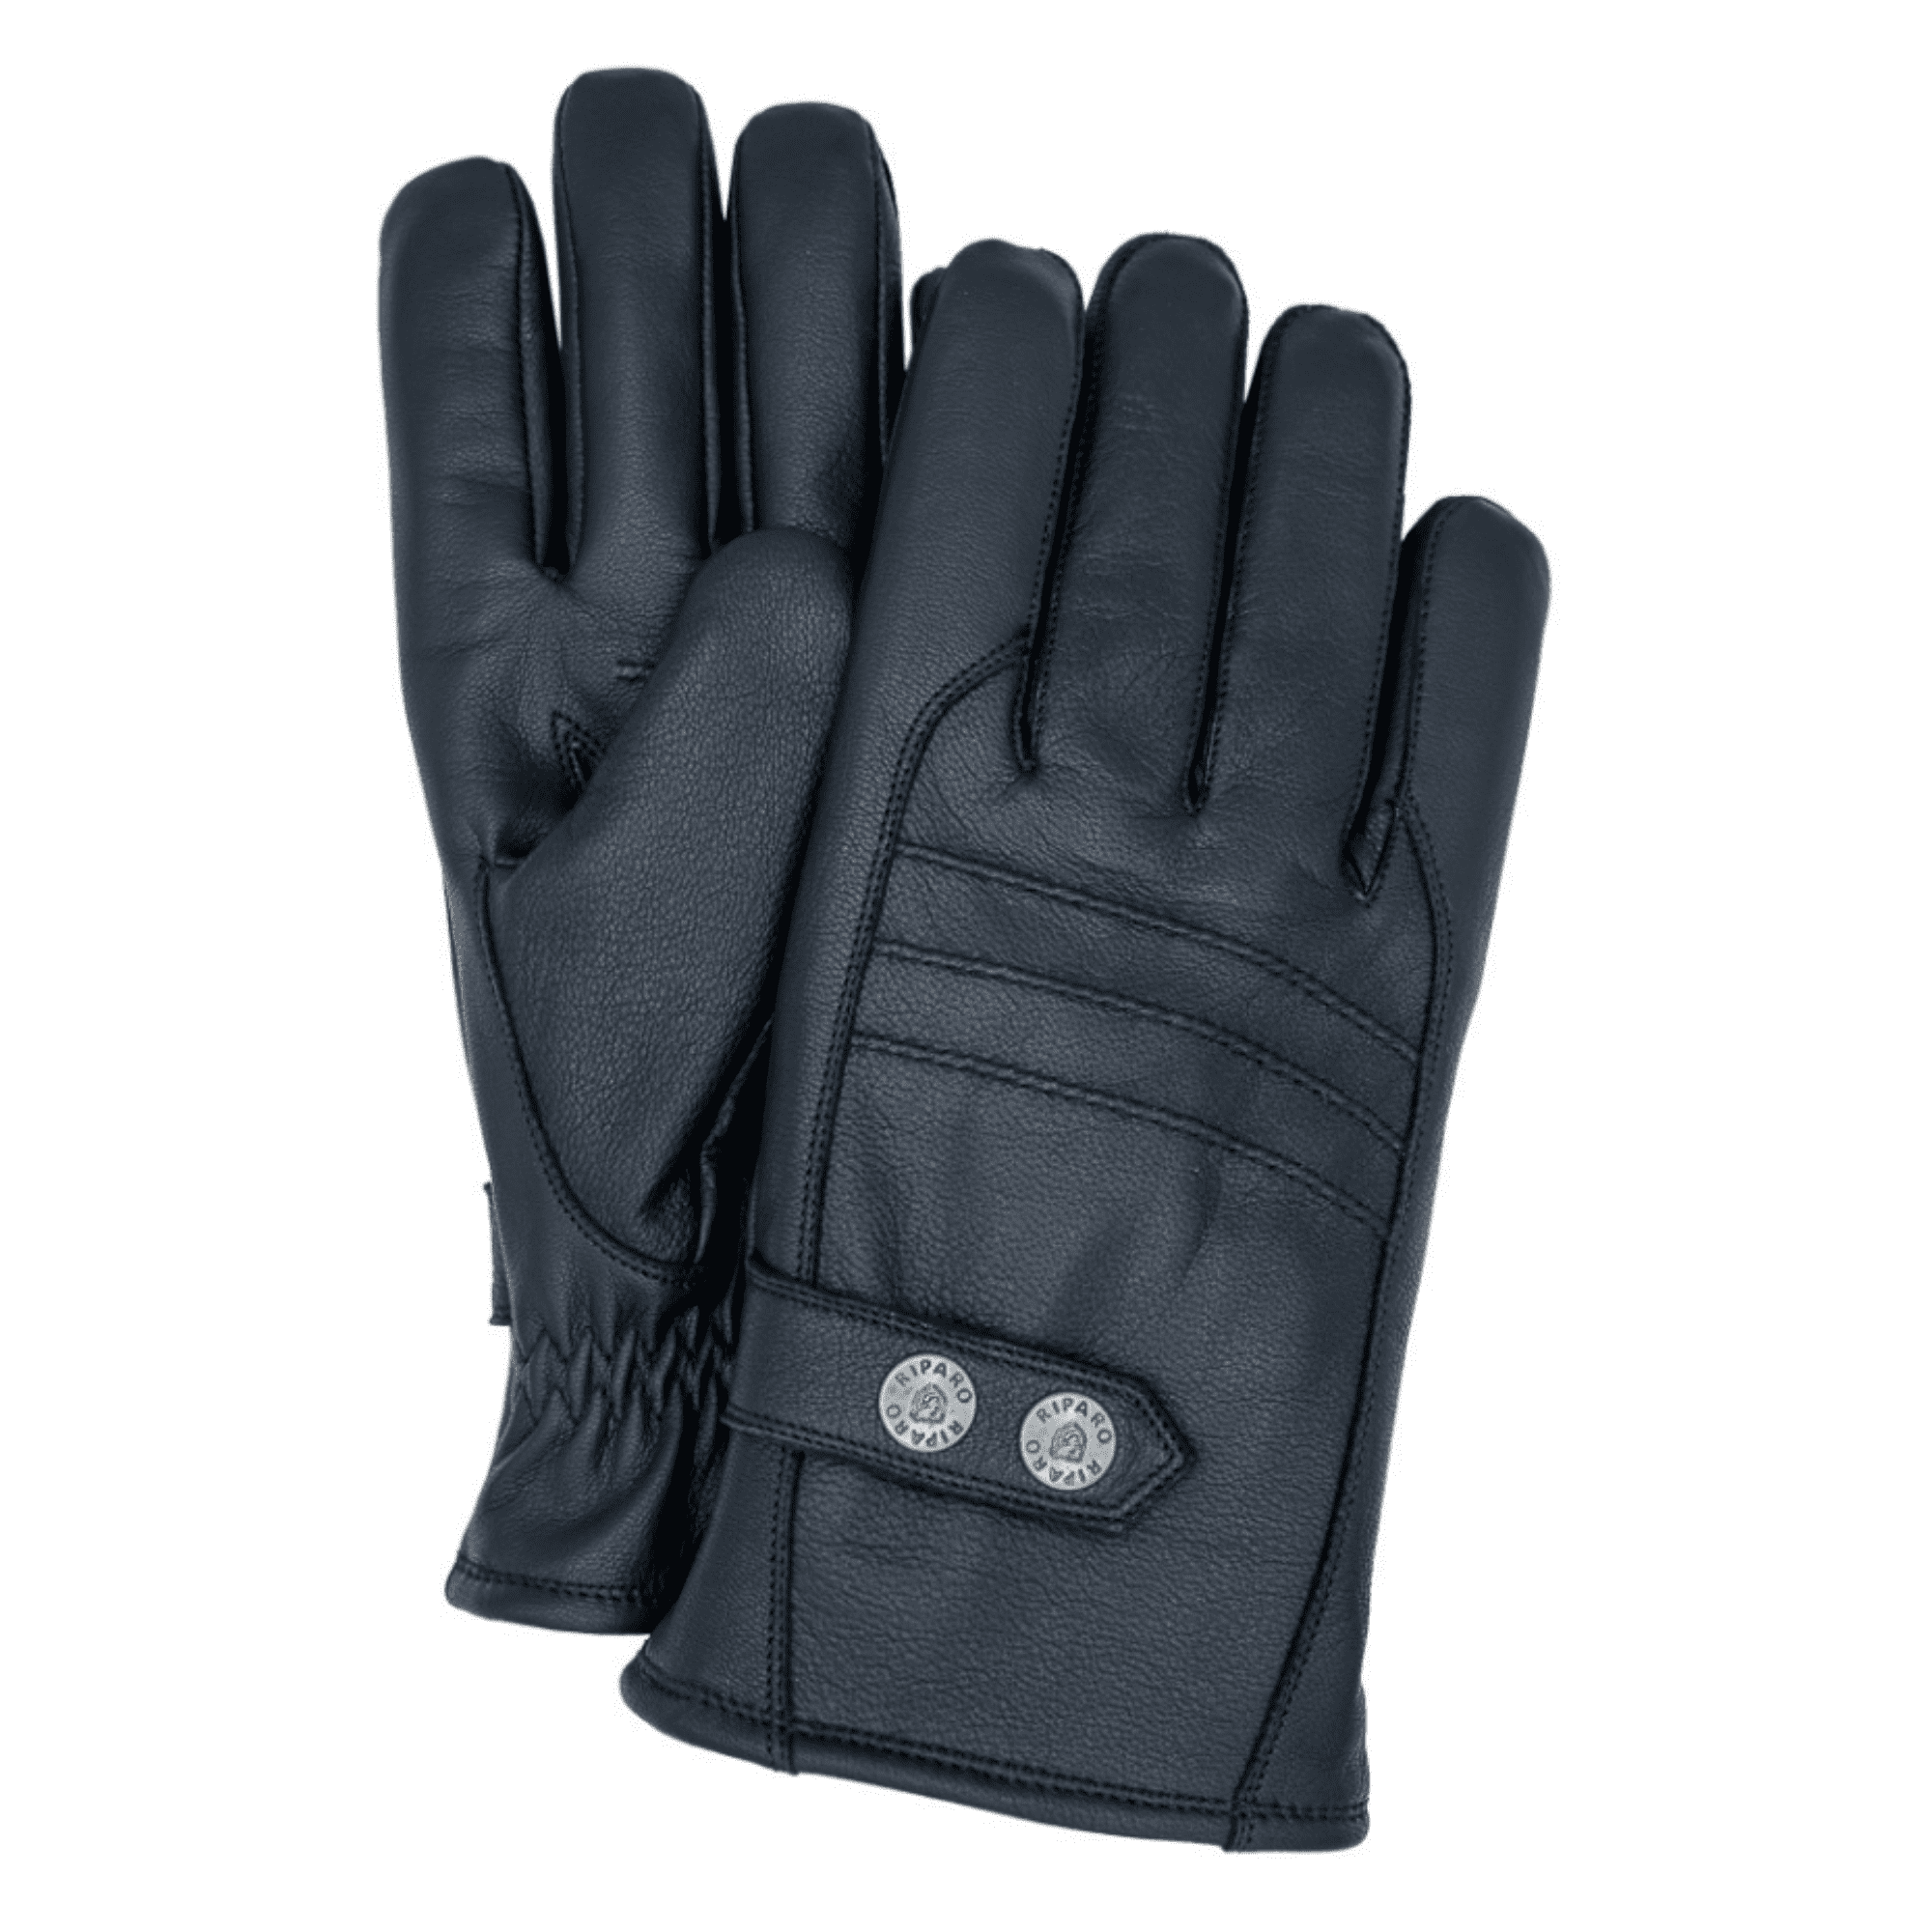 Riparo Waterproof Leather Winter Gloves 